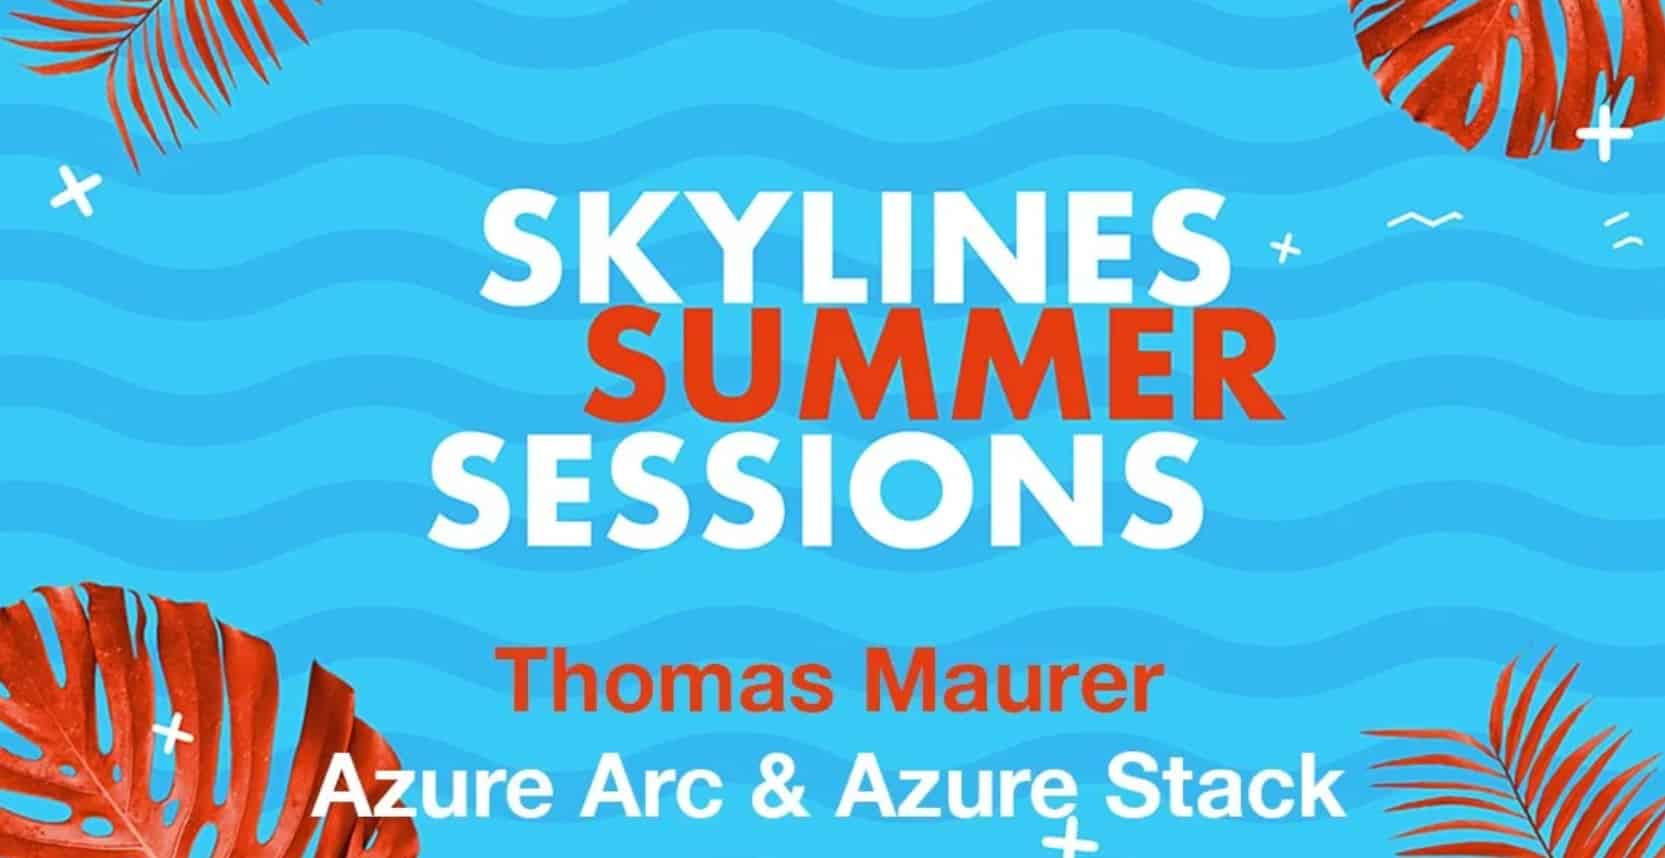 Skylines Summer Sessions - Azure Arc - Azure StackSkylines Summer Sessions - Azure Arc - Azure Stack